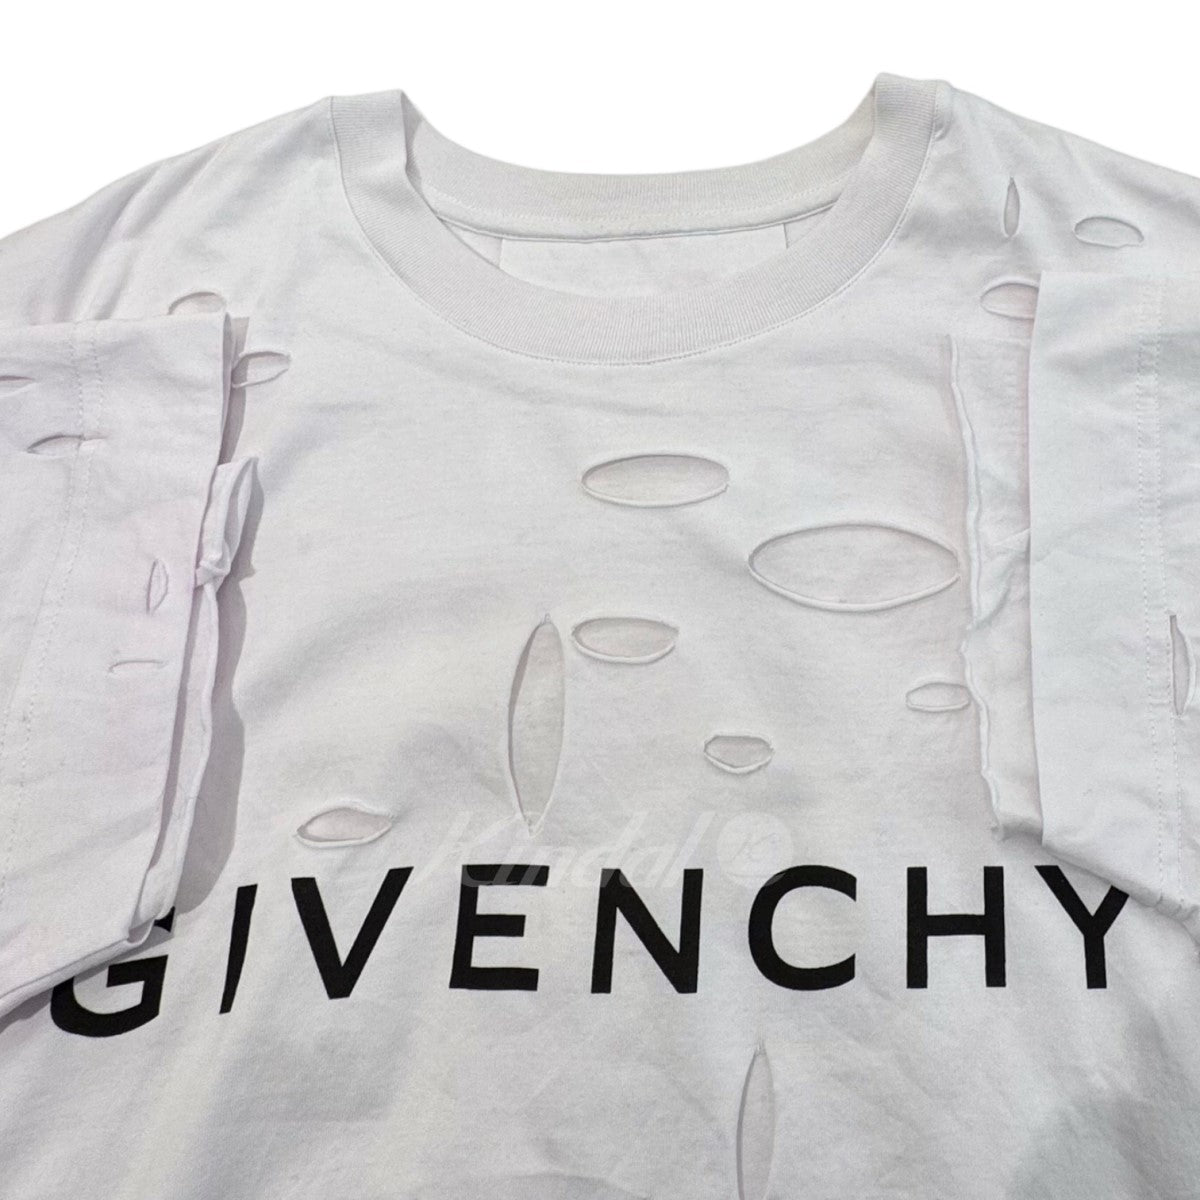 GIVENCHY(ジバンシィ) デストロイドエフェクト加工ロゴプリントTシャツ